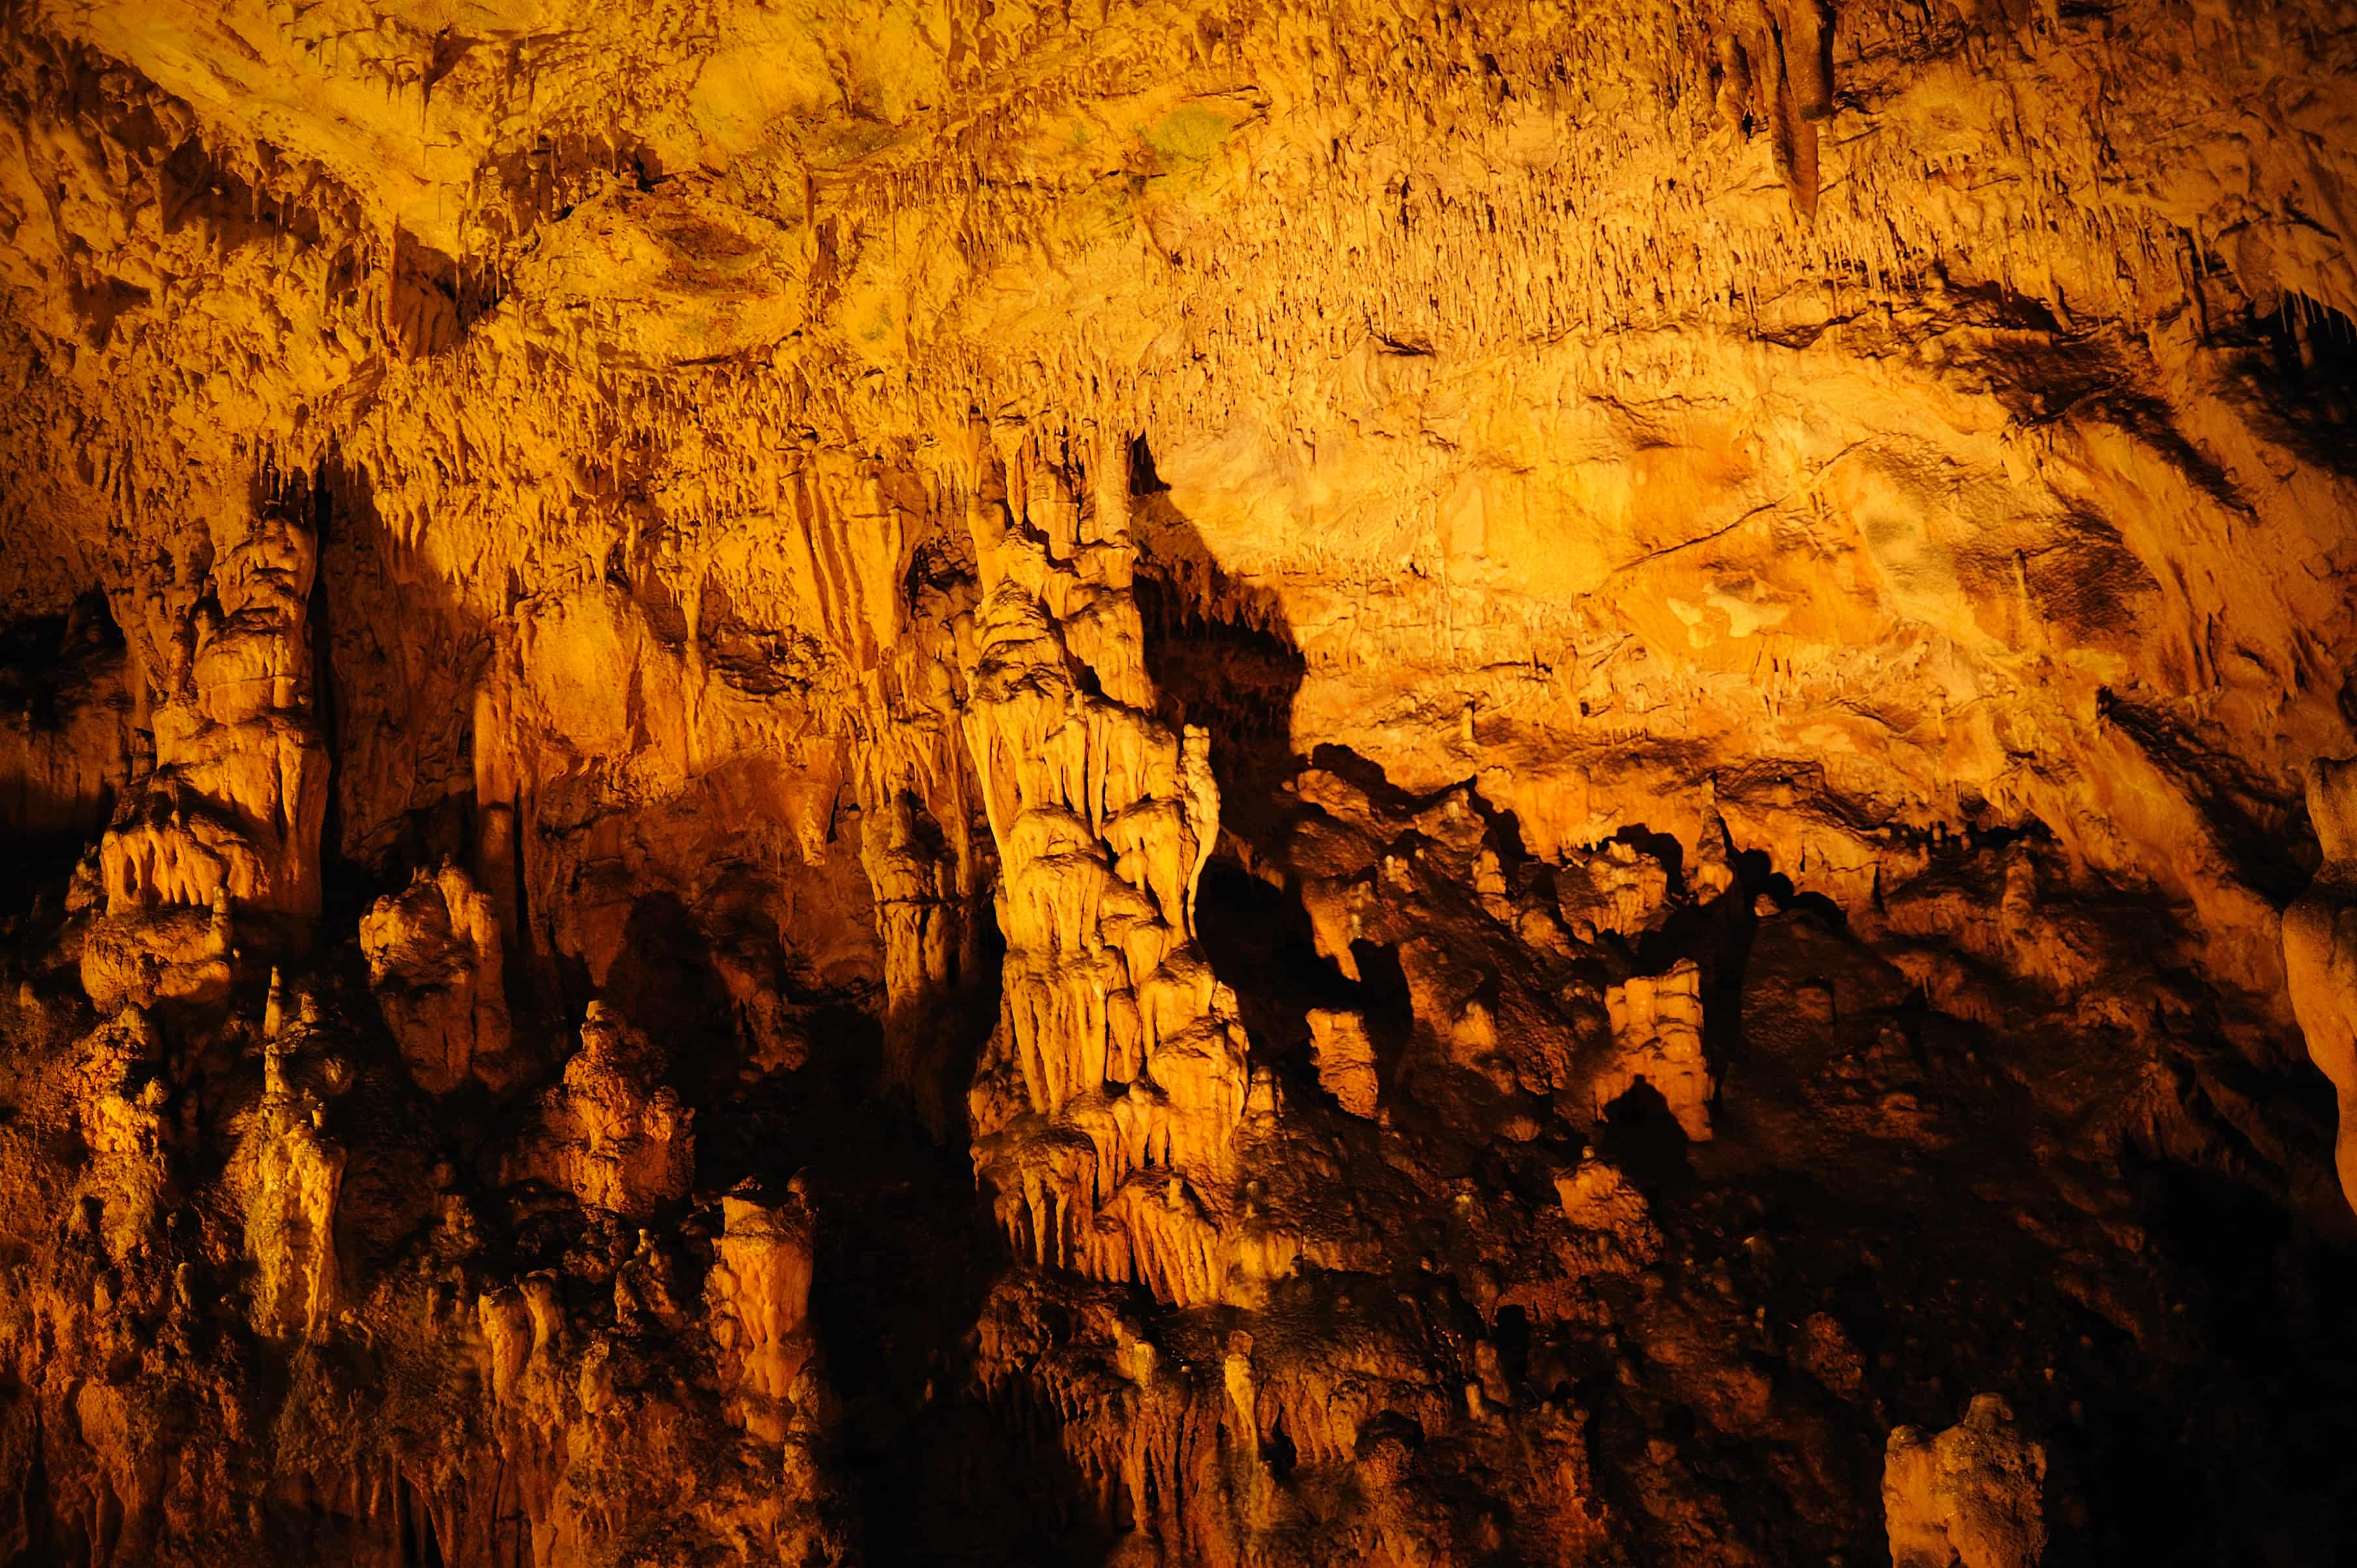 Bor du i Vinales, kan du tilkjøpe utflukten Cueva del Indio